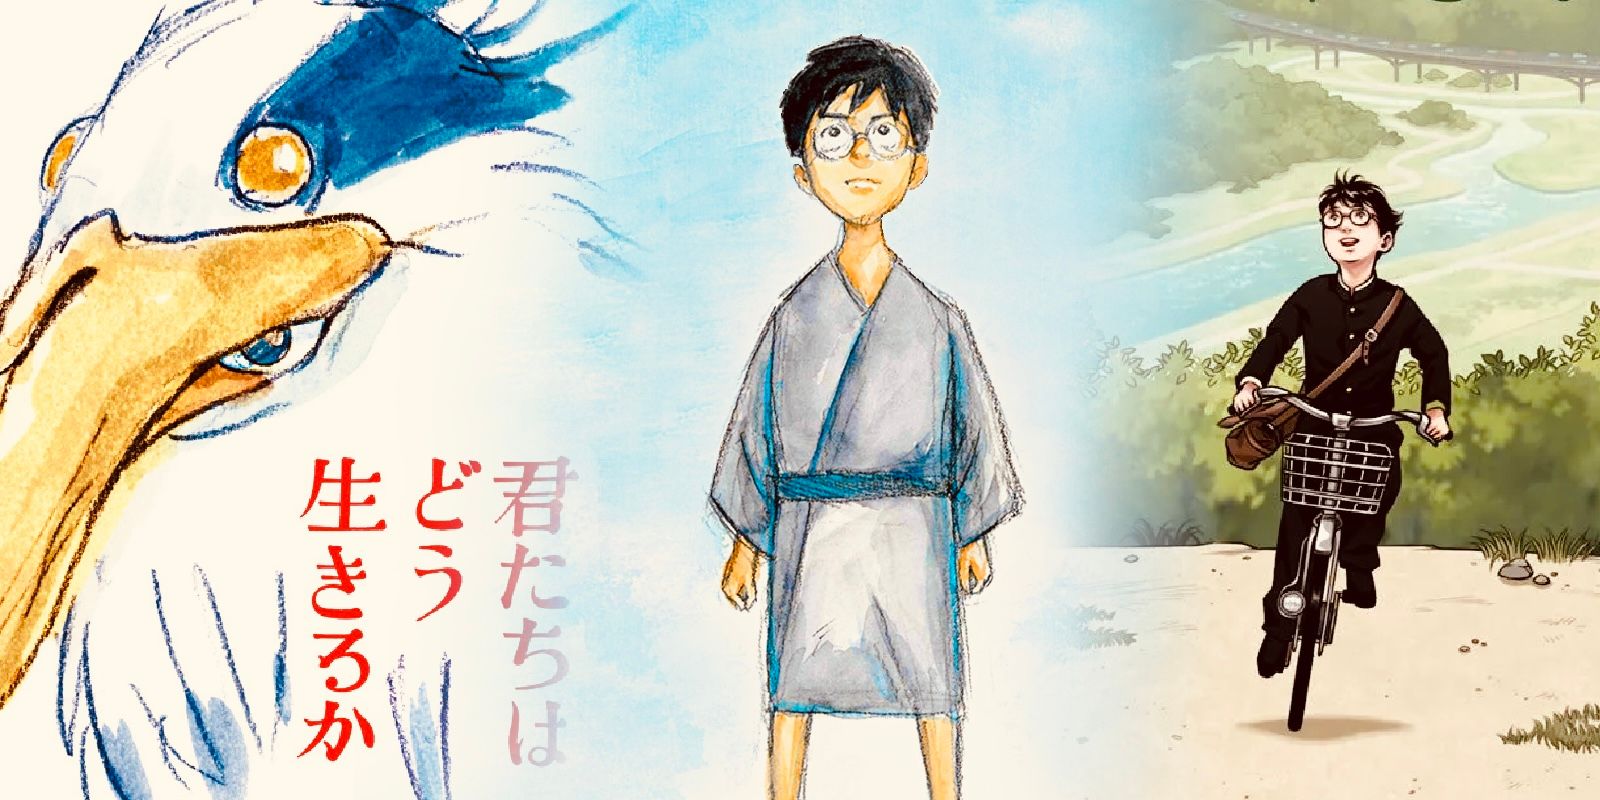 Studio-Ghibli-Shares-The-Boy-and-the-Heron-Artwork